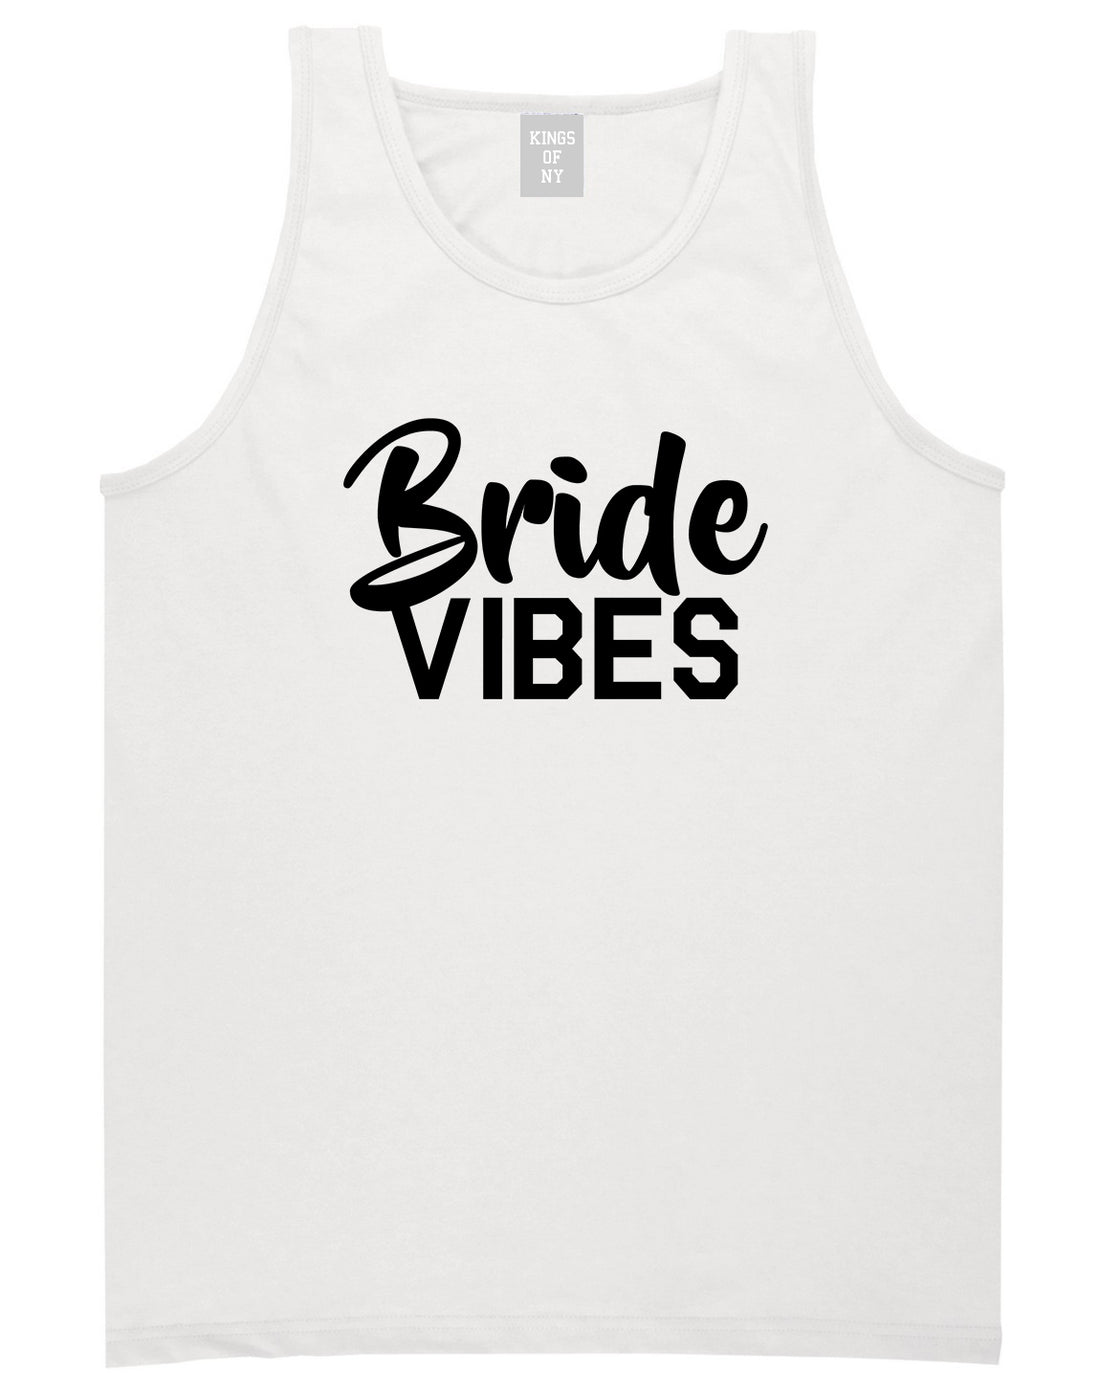 Bride Vibes Bridal Mens White Tank Top Shirt by KINGS OF NY